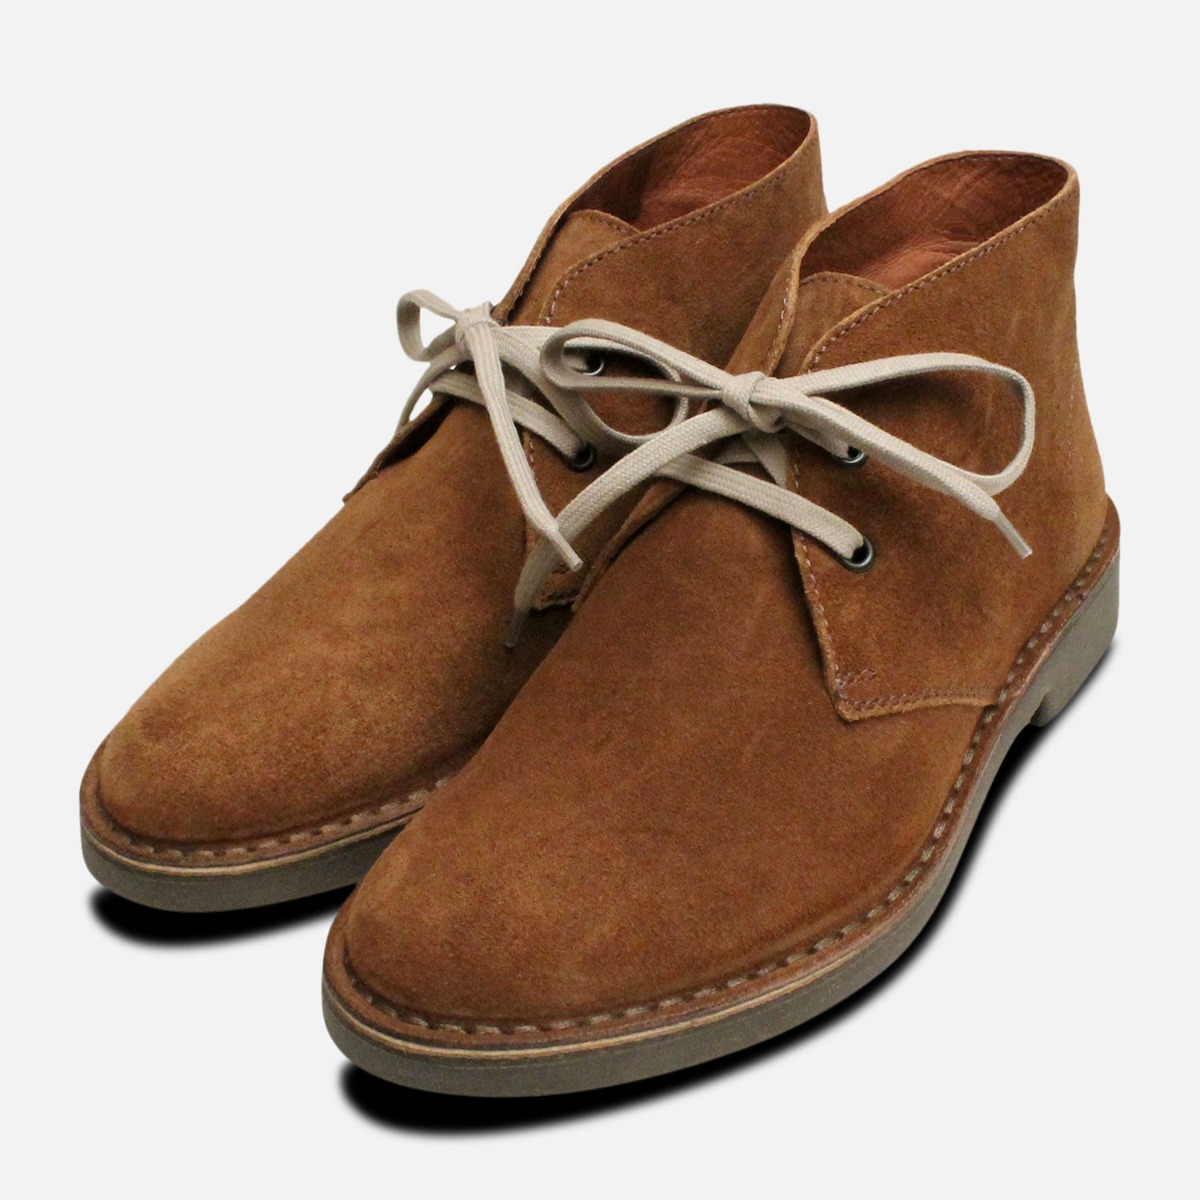 Peru Brown Suede Womens Italian Desert Boots | eBay